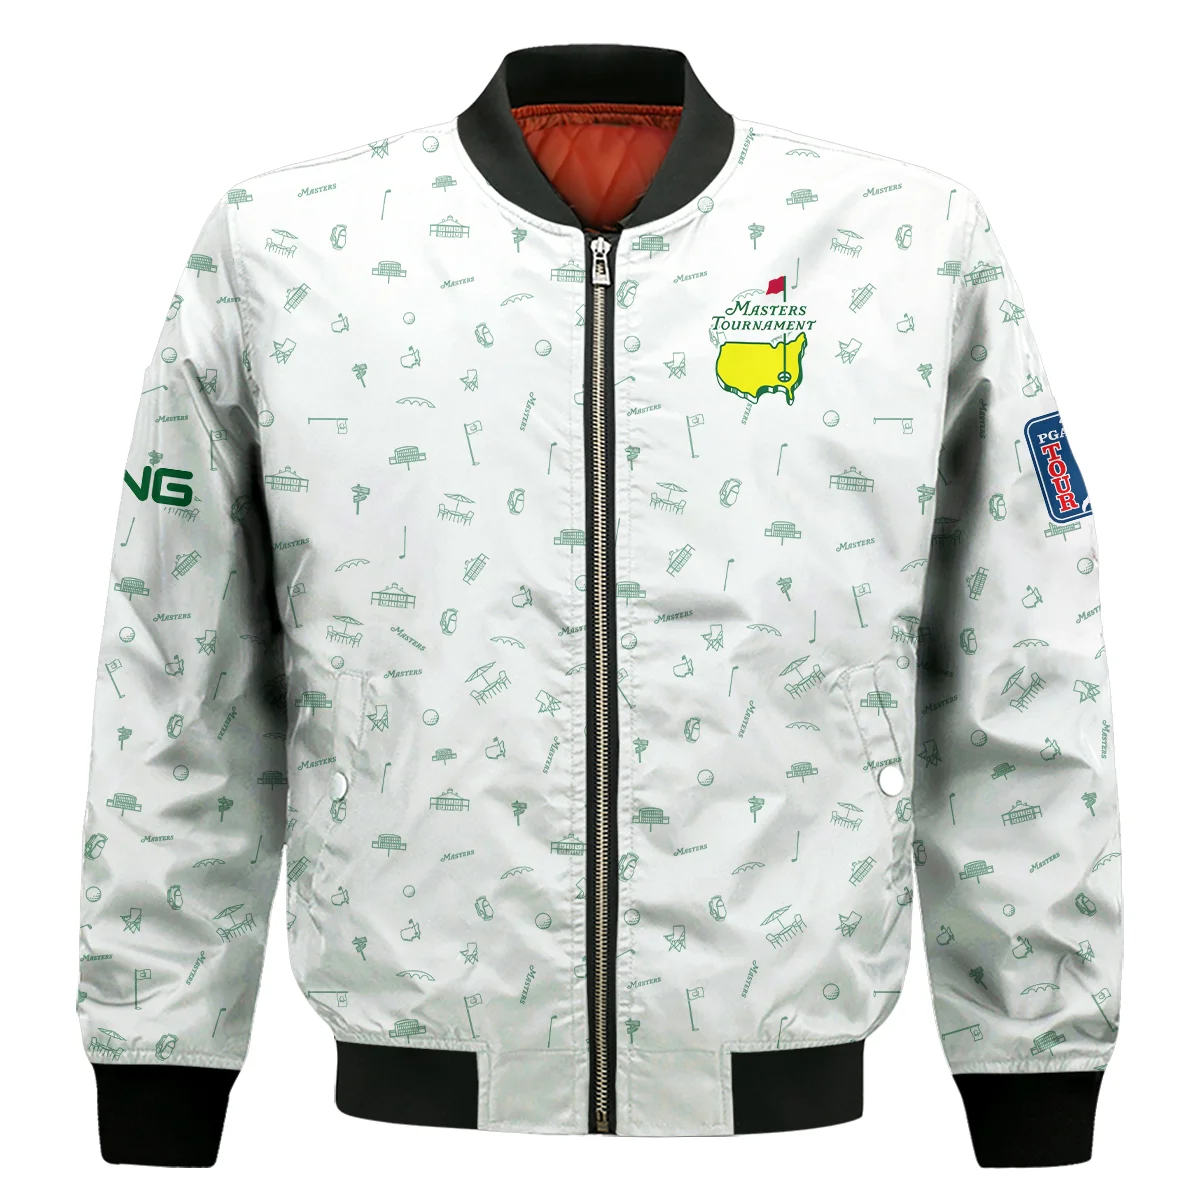 Golf Sport Masters Tournament Ping Zipper Polo Shirt Sports Augusta Icons Pattern White Green Zipper Polo Shirt For Men